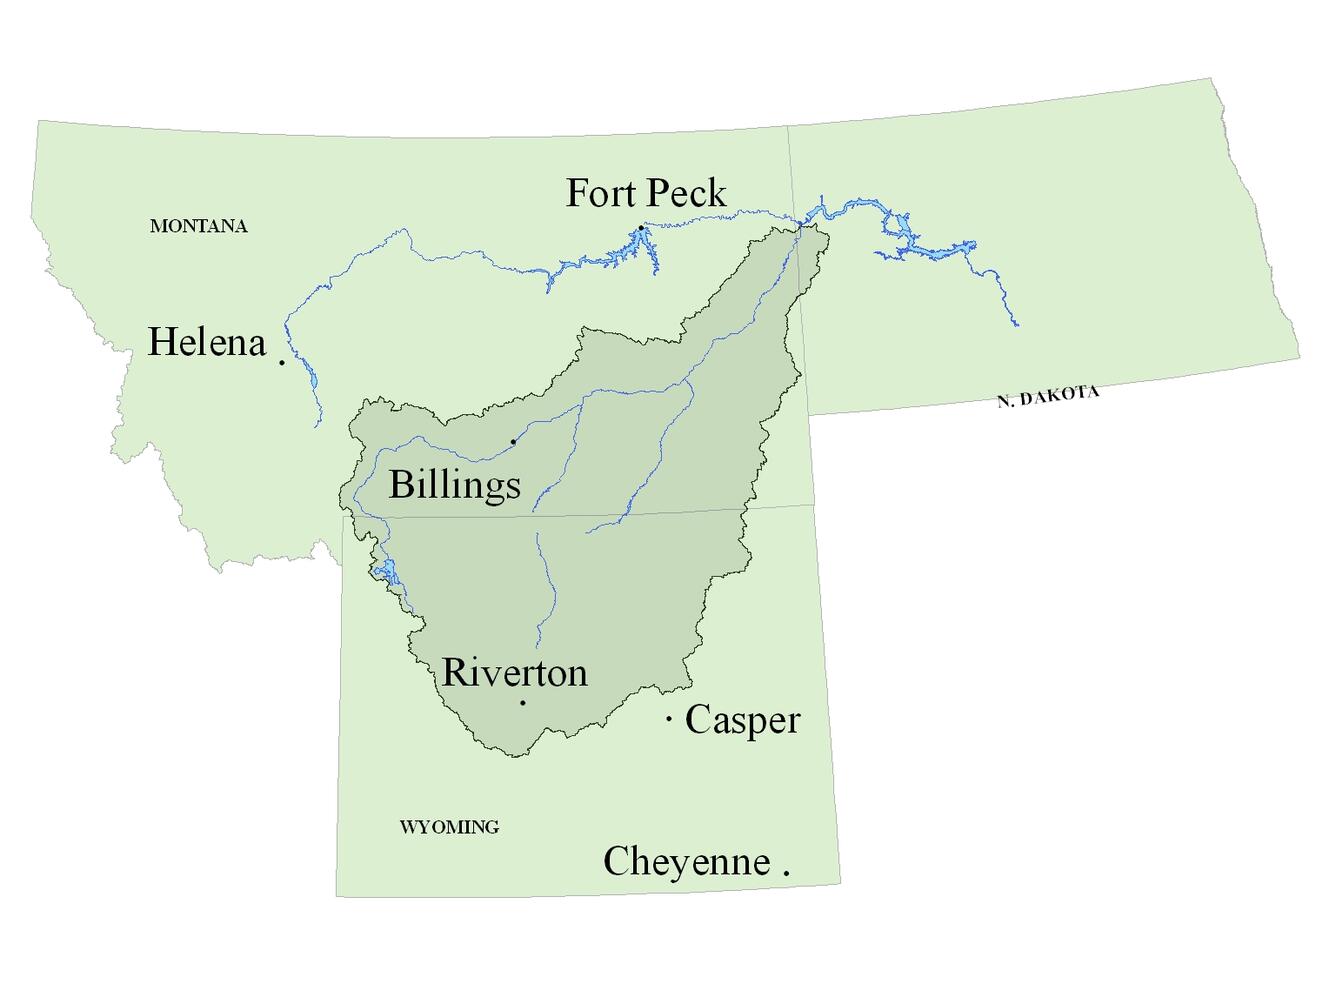 Yellowstone streamflow statistics study area map